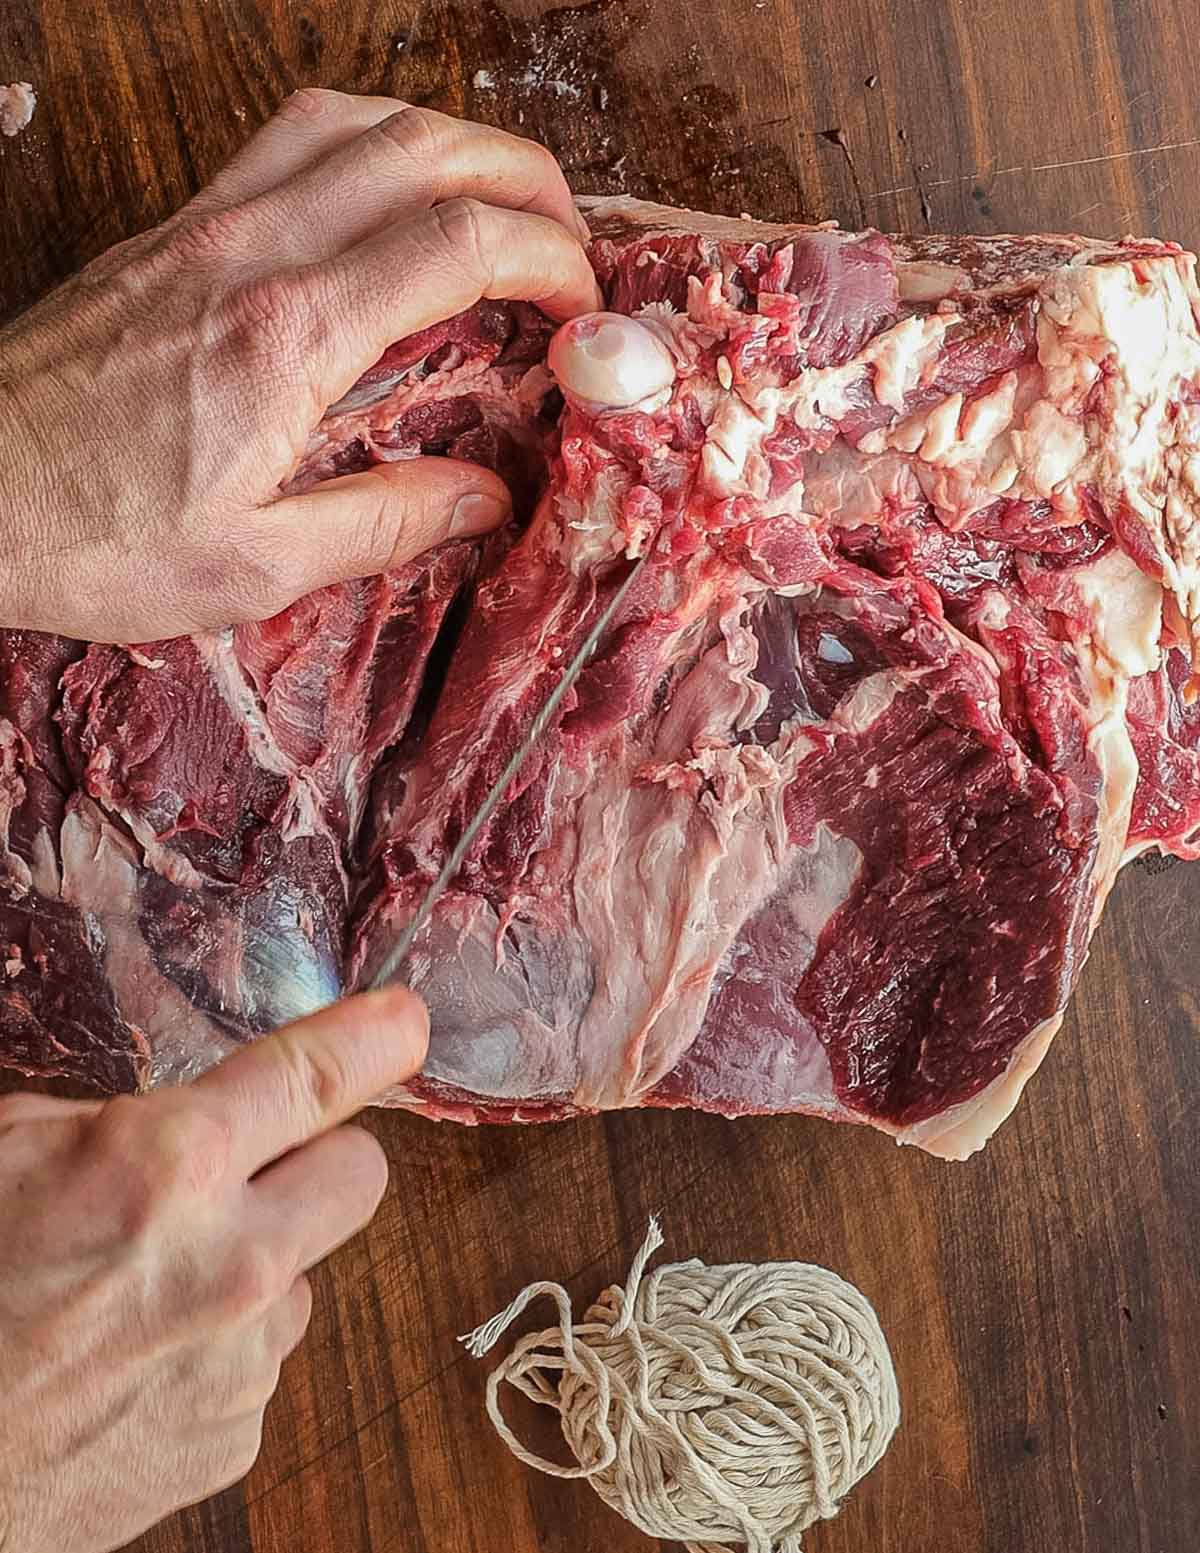 Removing the leg bones from a leg of lamb.